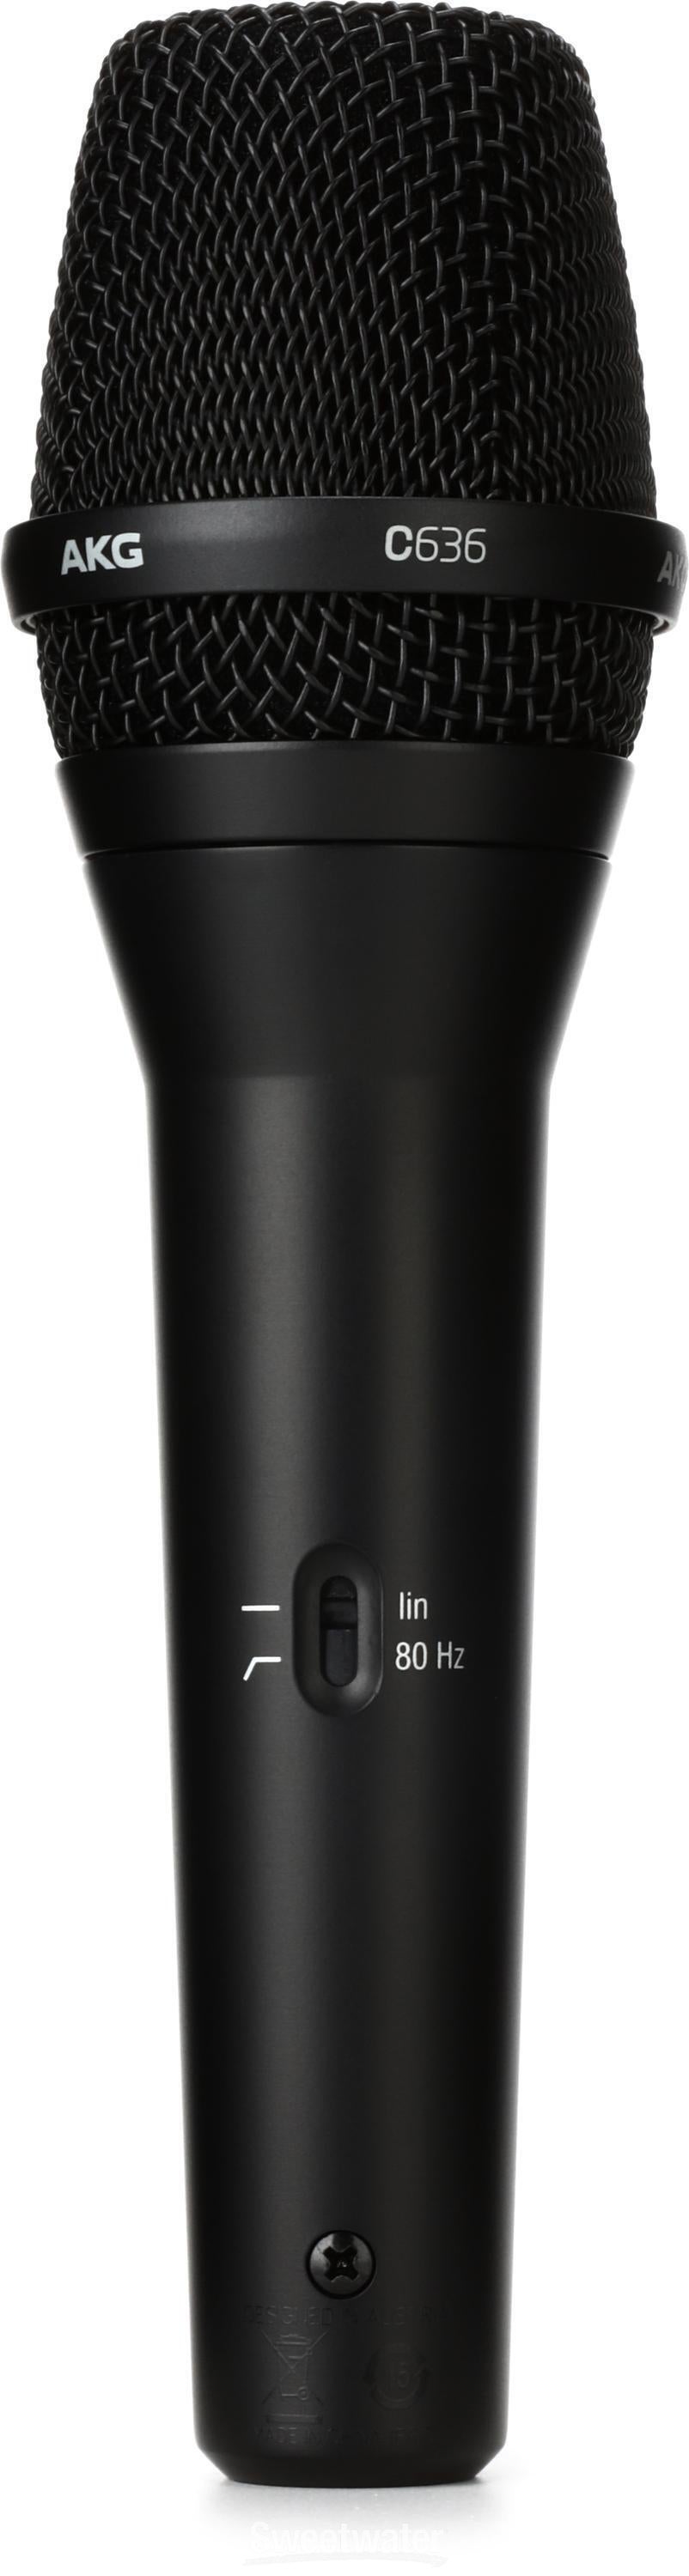 AKG C636 Condenser Handheld Vocal Microphone - Black